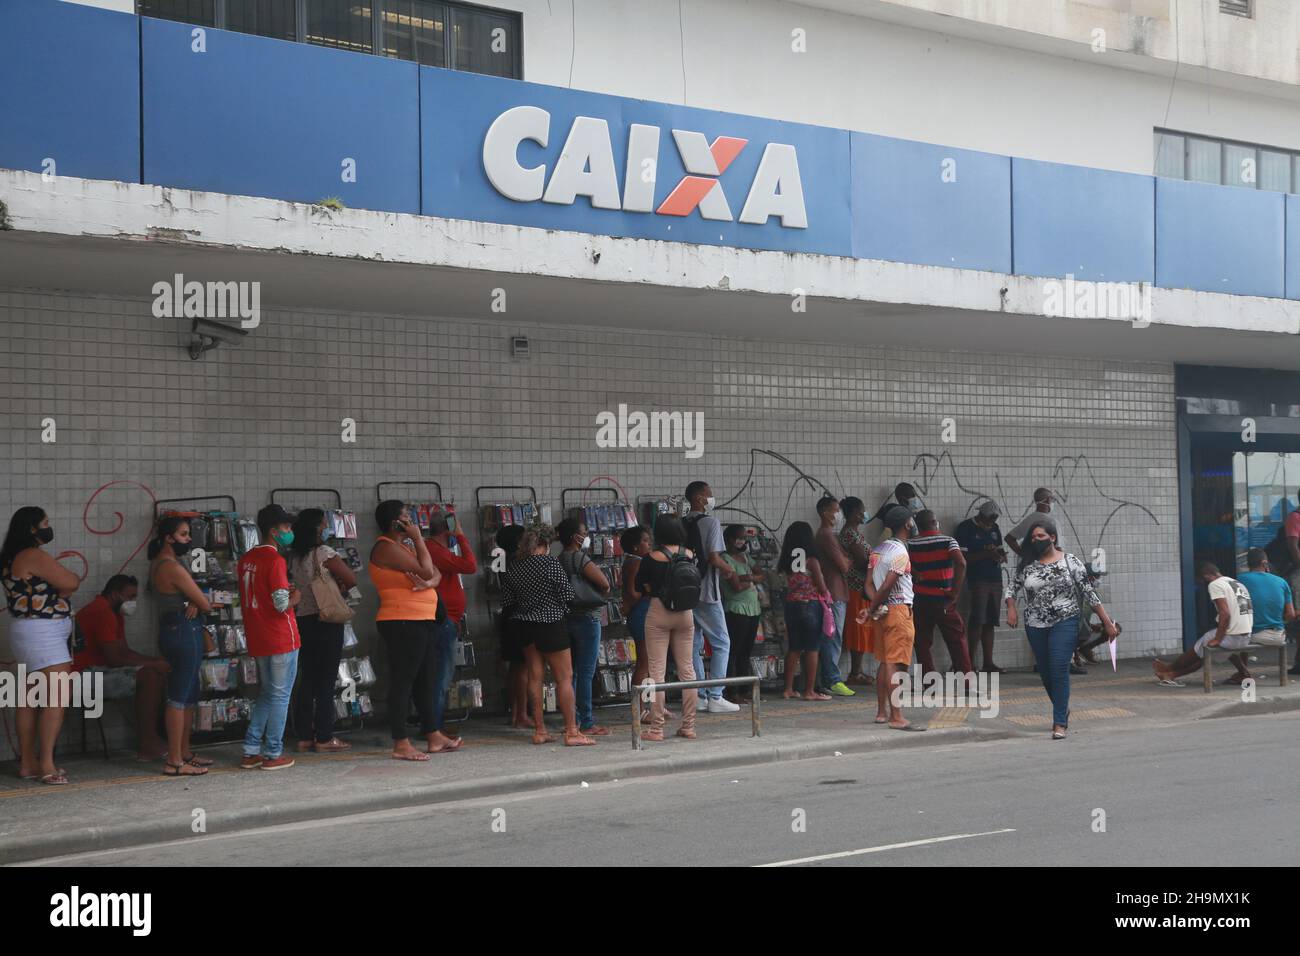 salvador, bahia, brazil - december 7, 2021: people are seen queuing for tending at a Caixa Economica Federal branch in the city of Salvador. Stock Photo